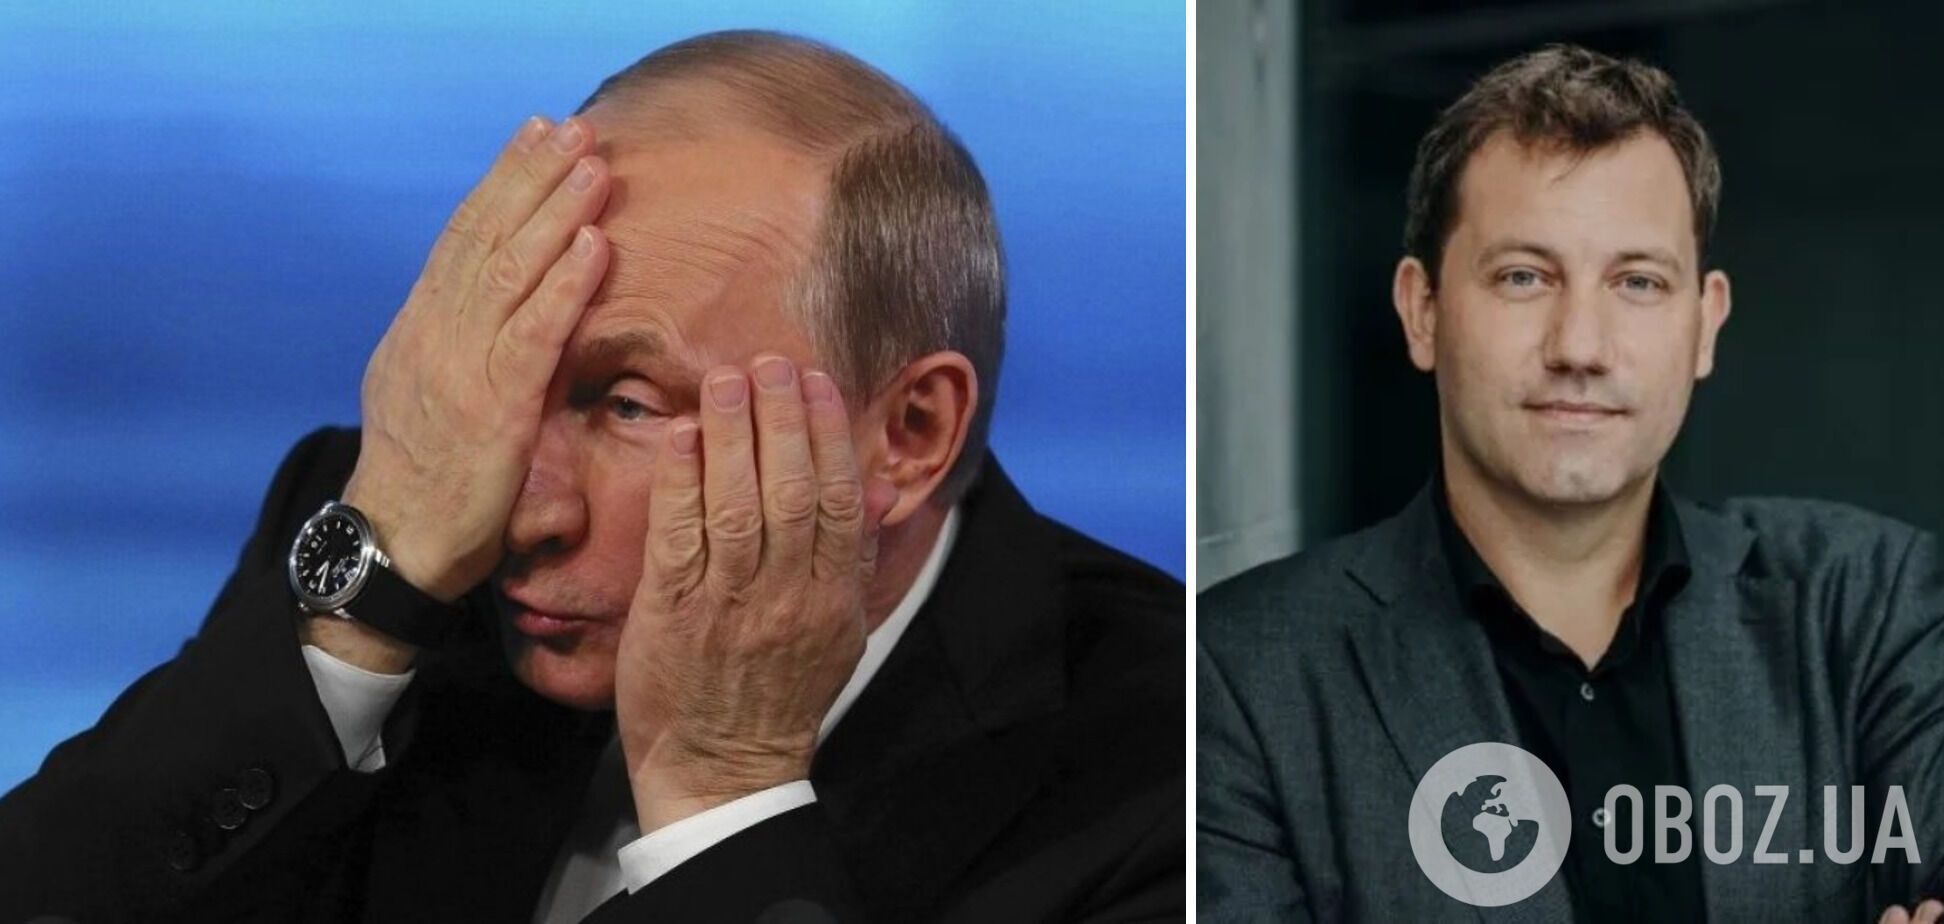 Ларс Клингбейл считает конец Путина неизбежным